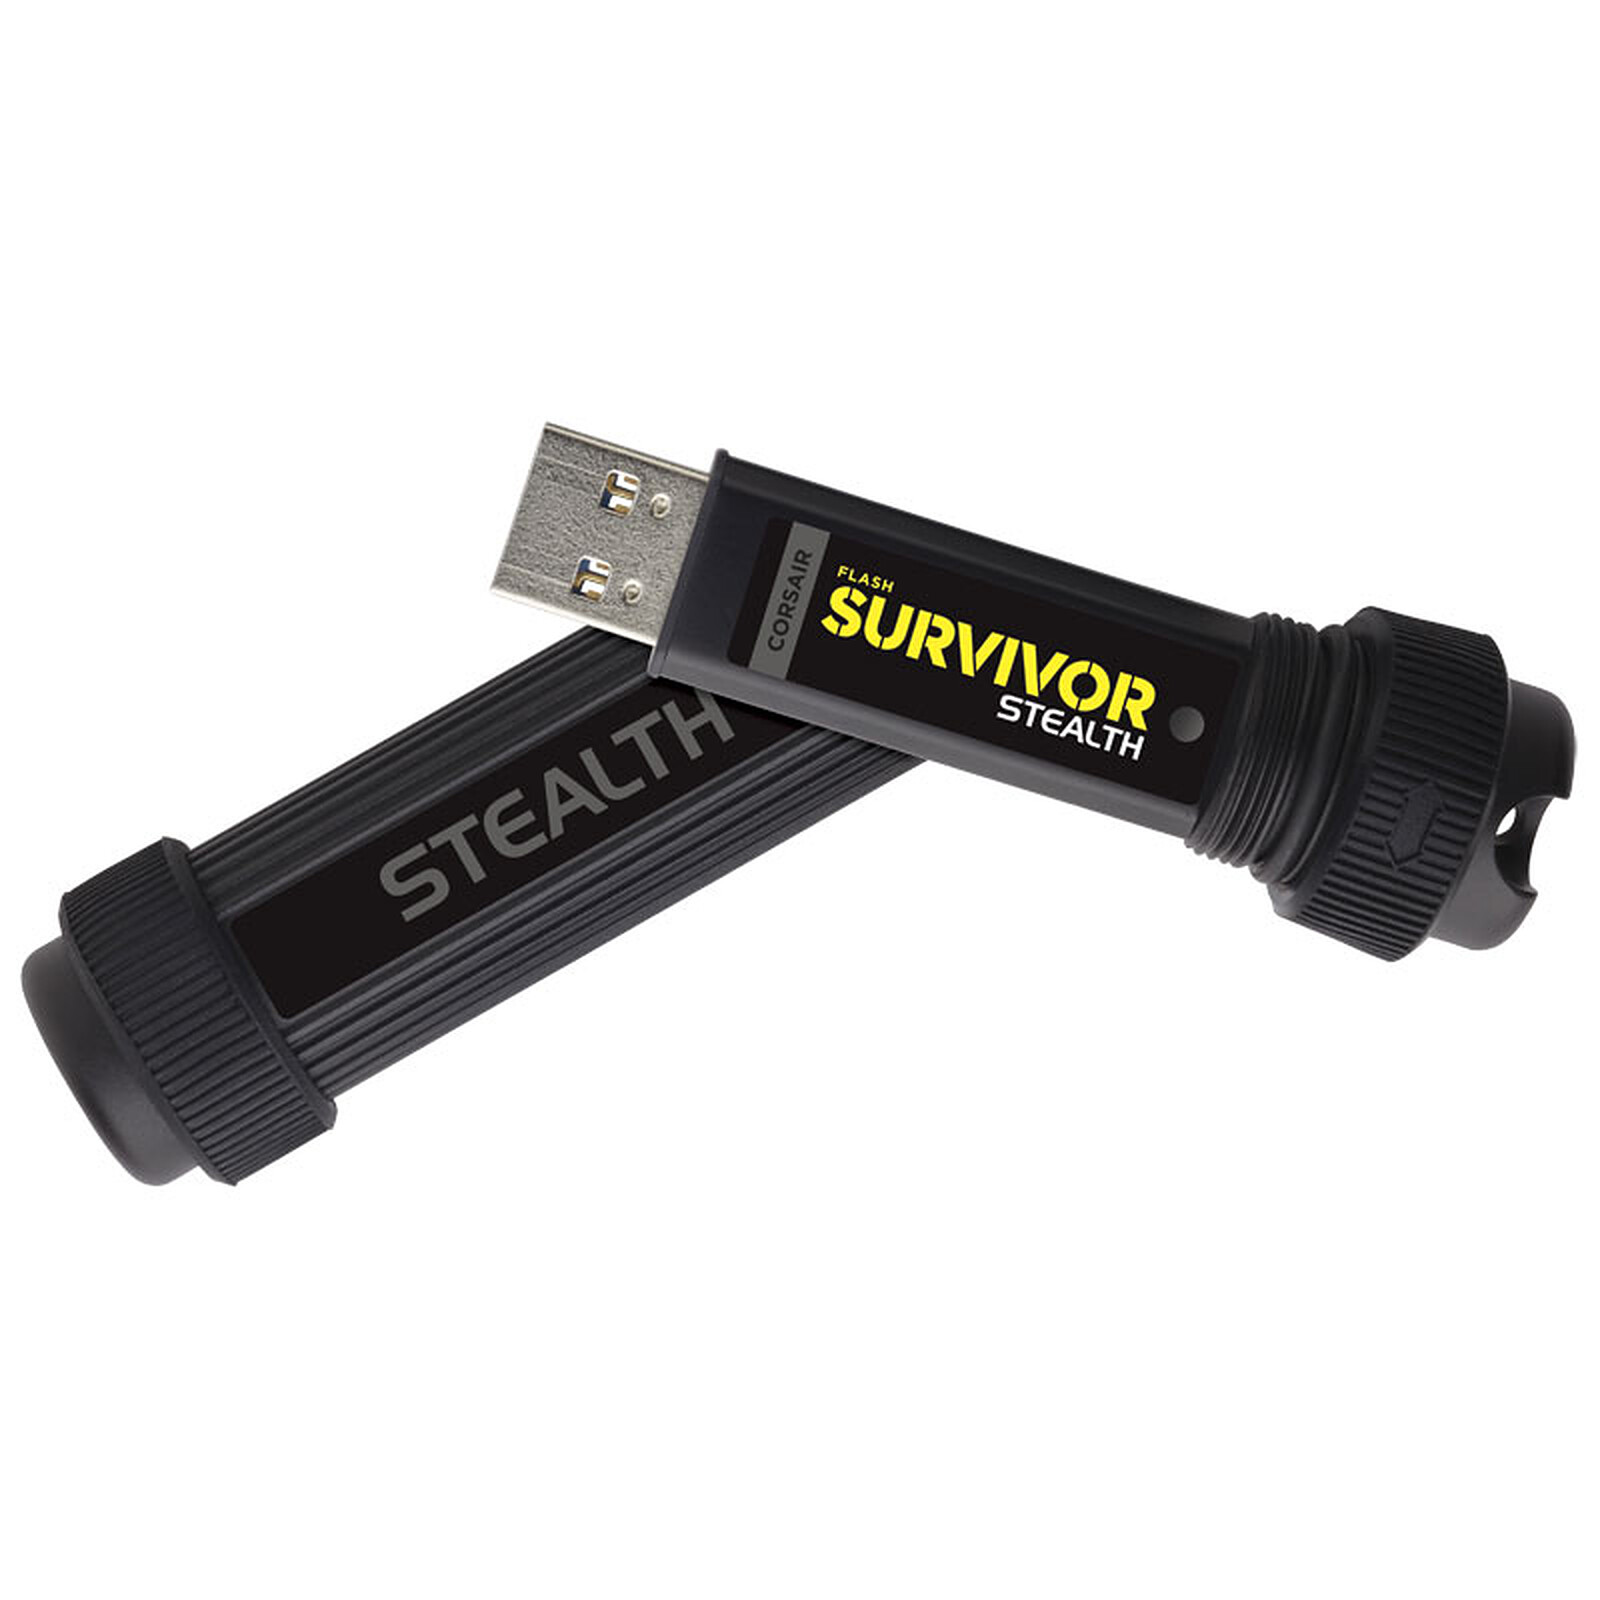 Corsair Flash Survivor Stealth 3.0 USB drive Corsair on LDLC